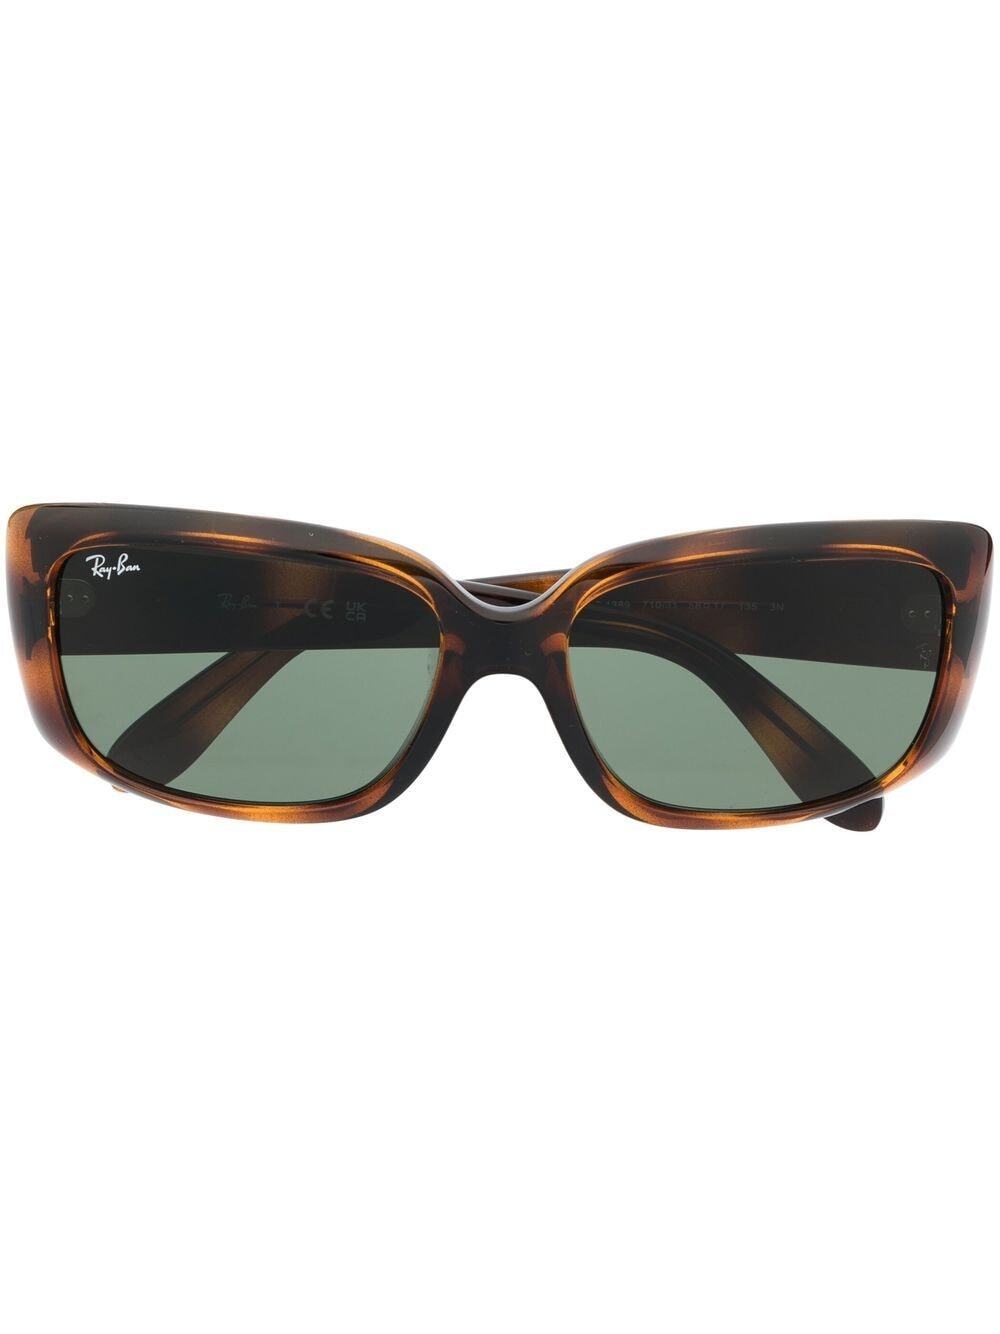 Ray-Ban rectangle-frame tortoiseshell sunglasses - Brown